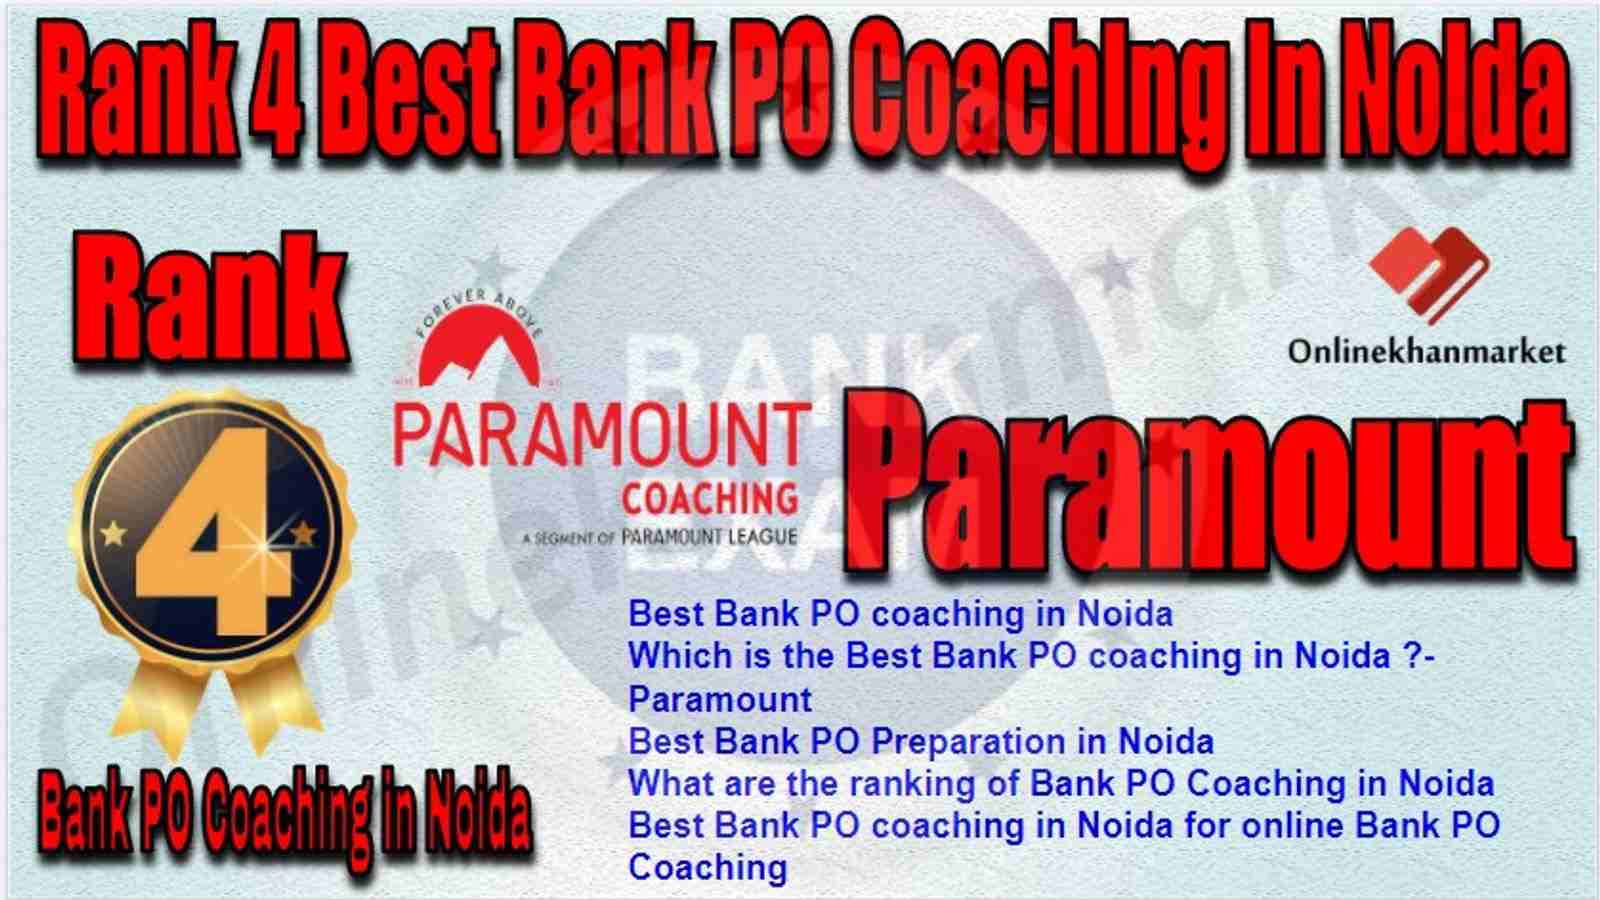 Rank 4 Best Bank PO Coaching in Noida